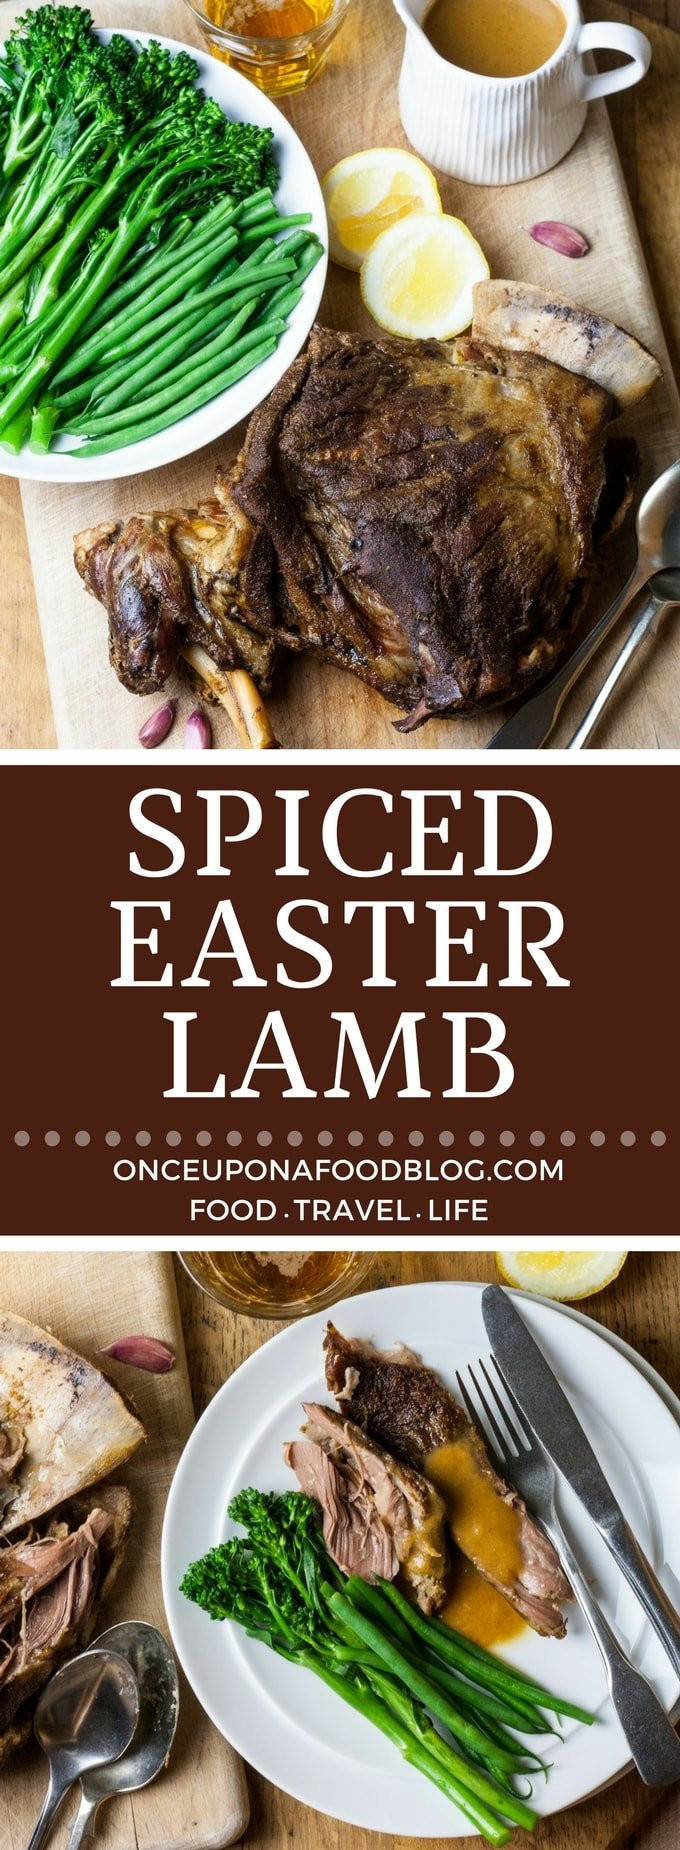 Easter Lamb Menu
 Spiced Easter Lamb